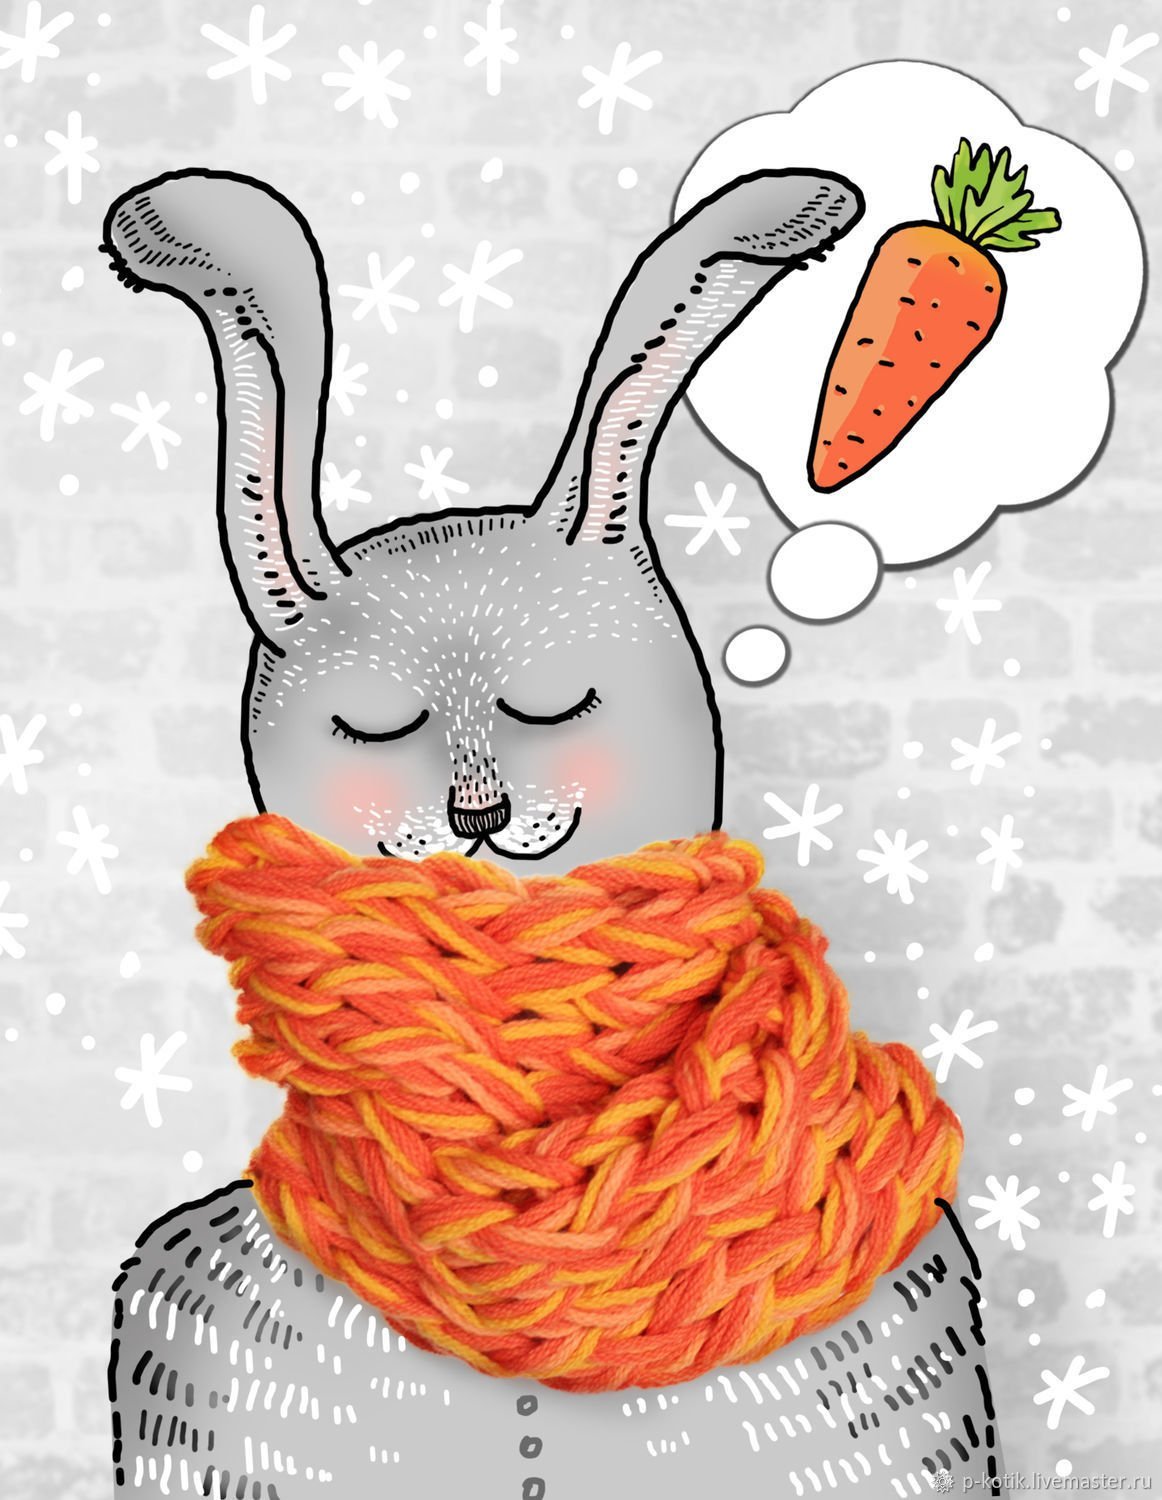 Зайчик морковь. Заяц с морковкой. Морковка арт. Зайка с морковкой. Кролик с морковкой.